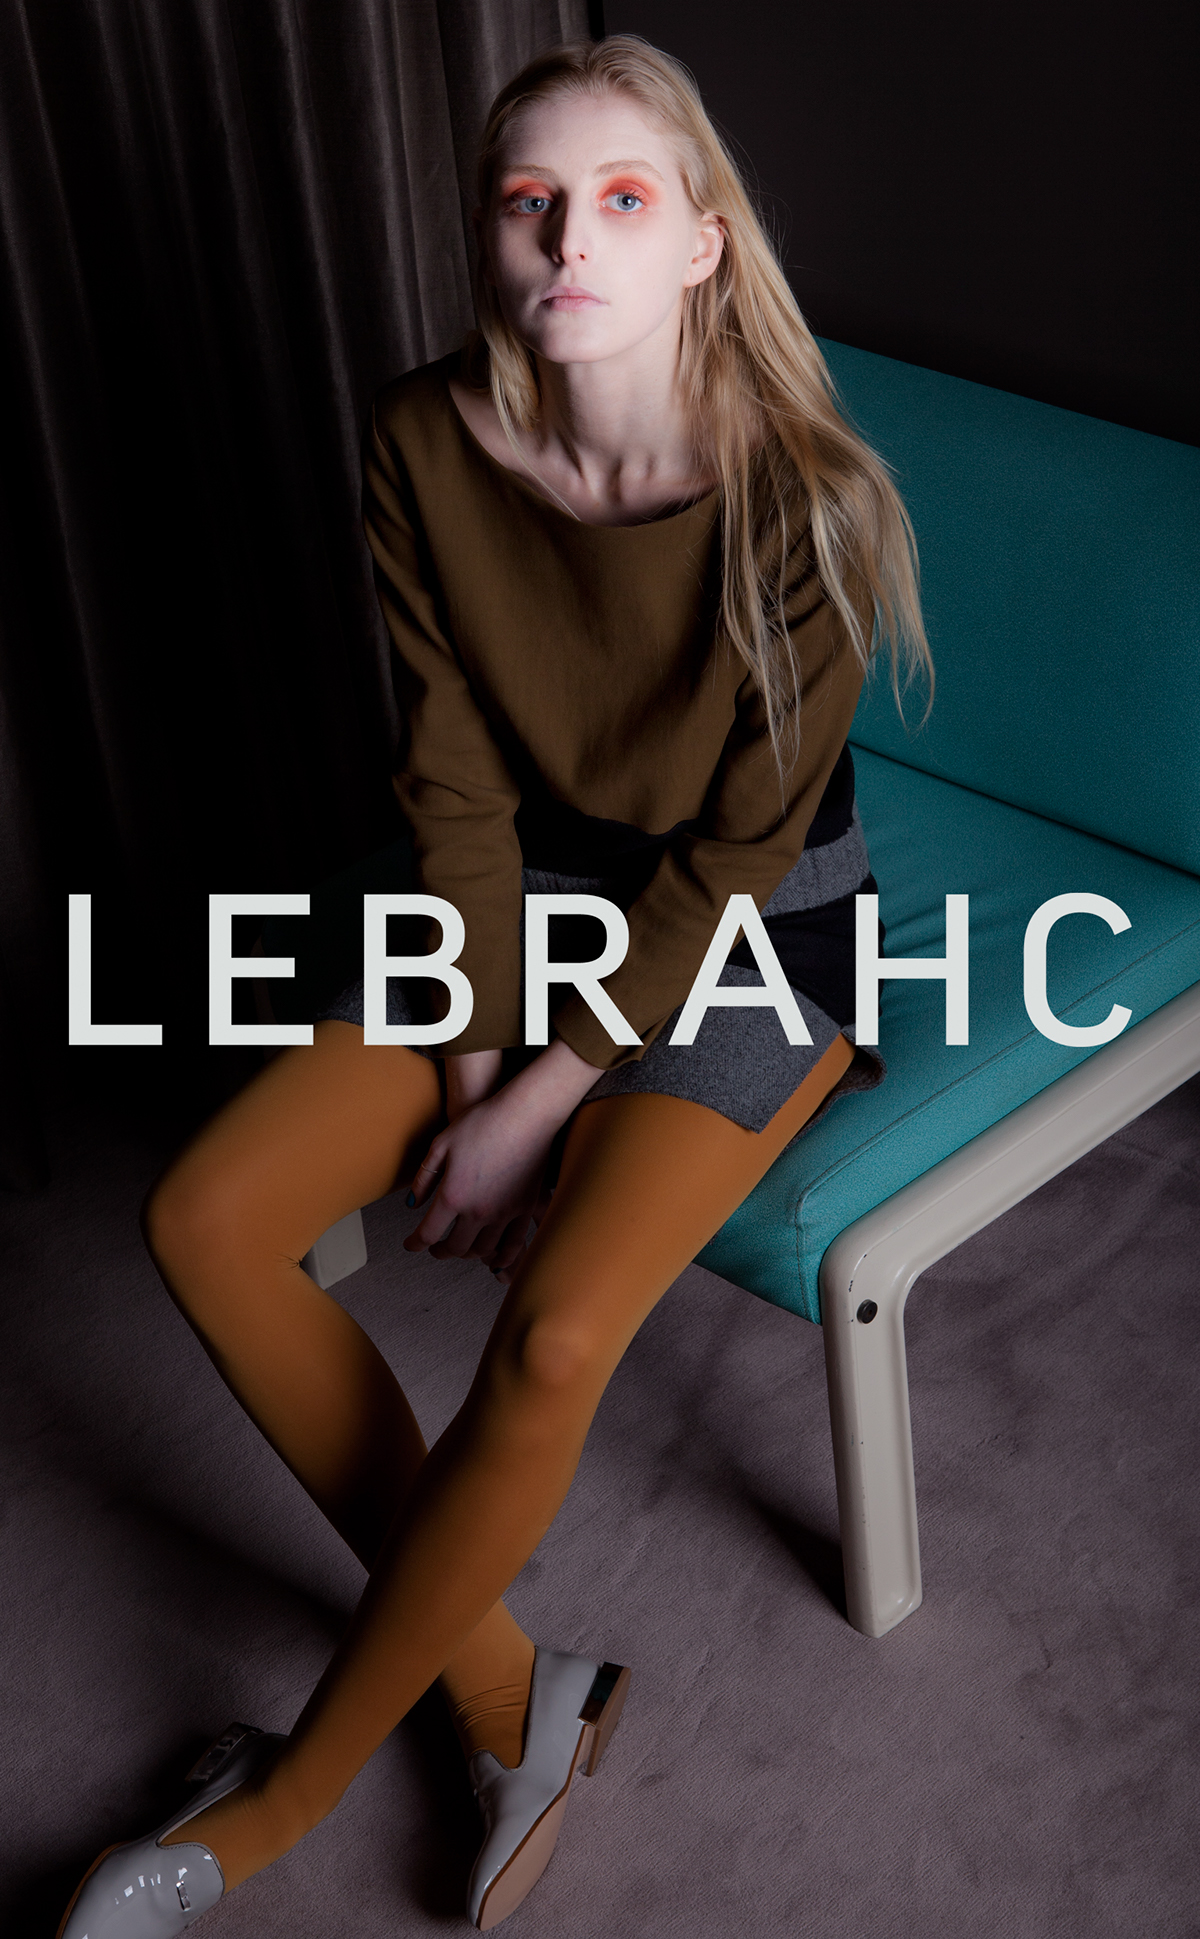 lebrahc made in Belgium kortrijk belgium fashion design New brand rtw ready to wear women's wear luxury minimal MINIMAL CLOTHING Clothing winter cool clothing